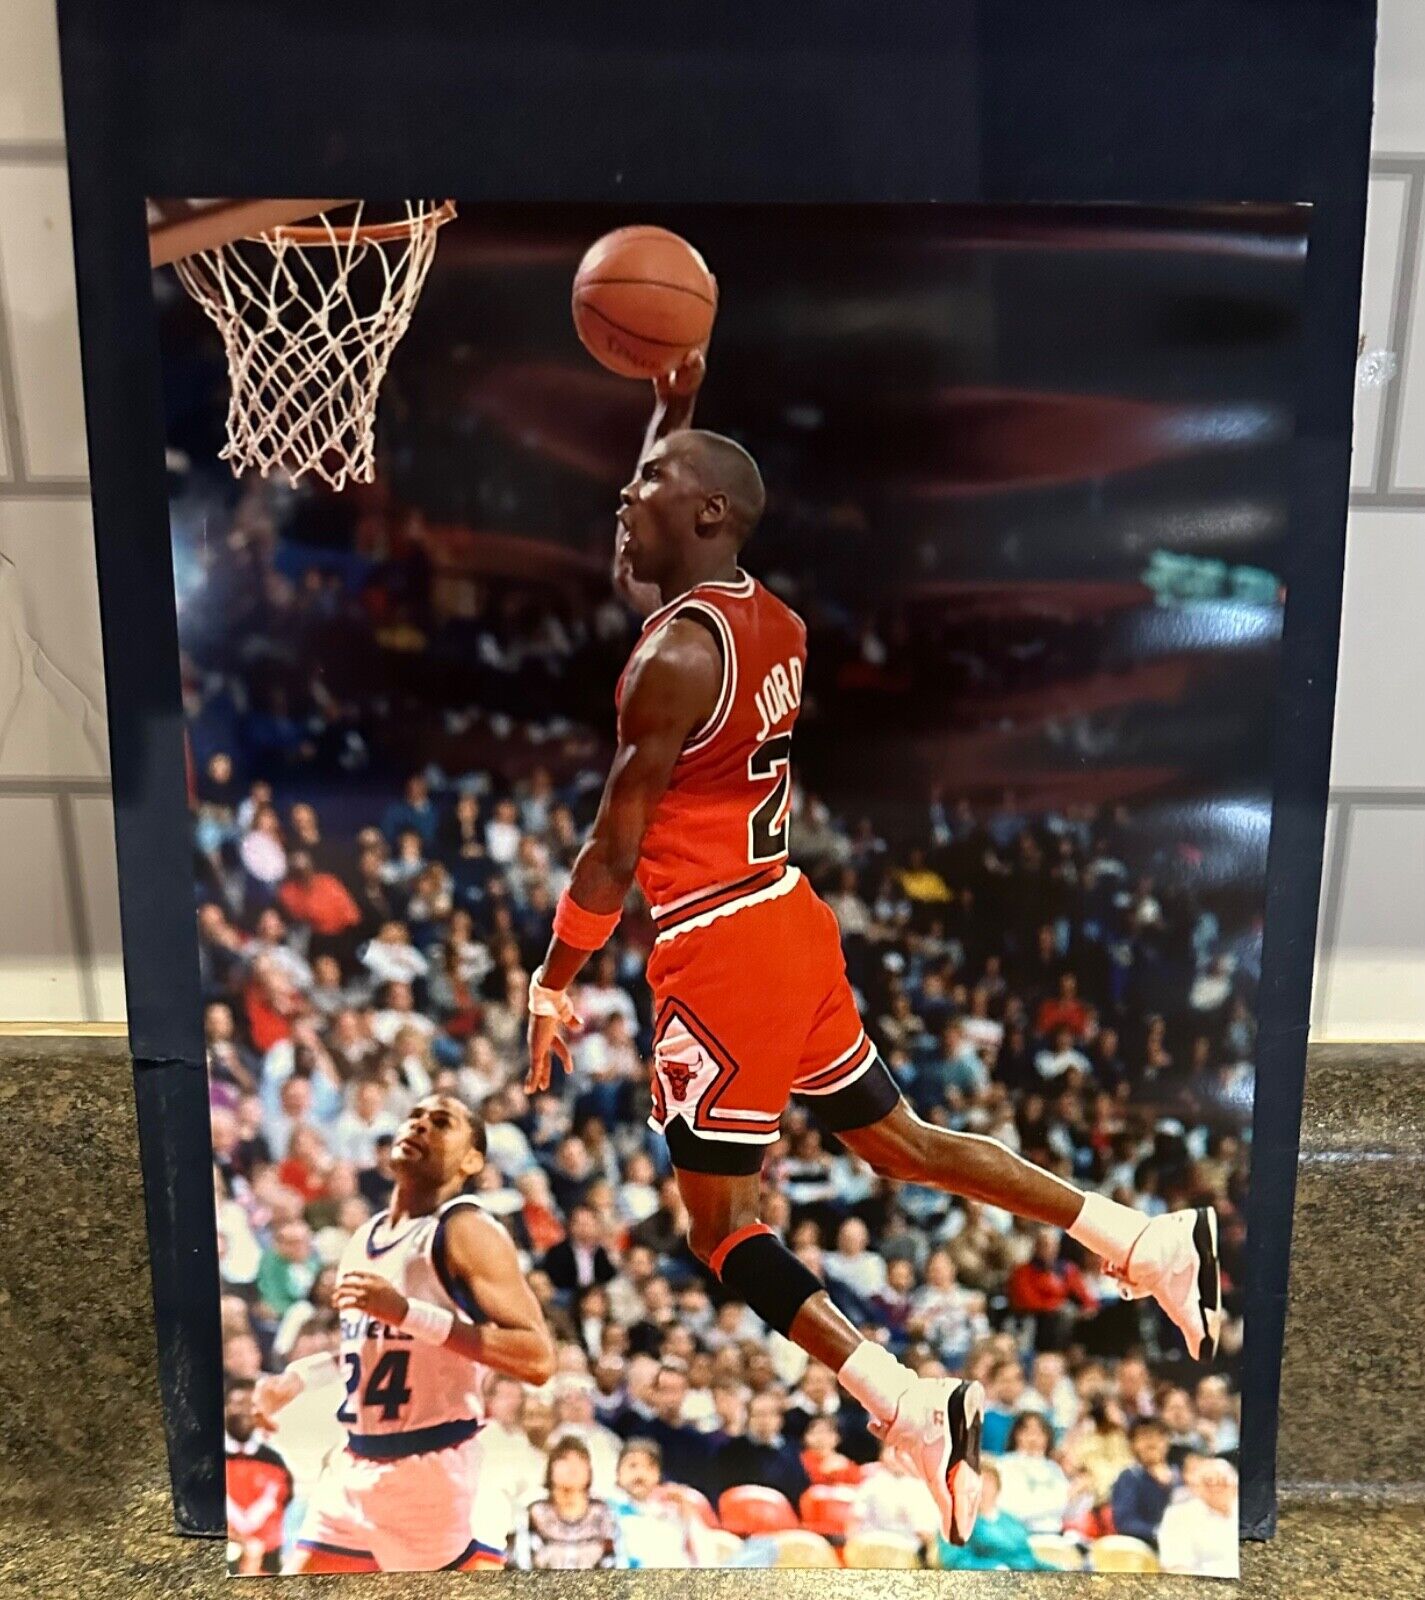 Michael Jordan 8x10 sports photo, Plus 3 Others. 2 Photos Are Autographed.